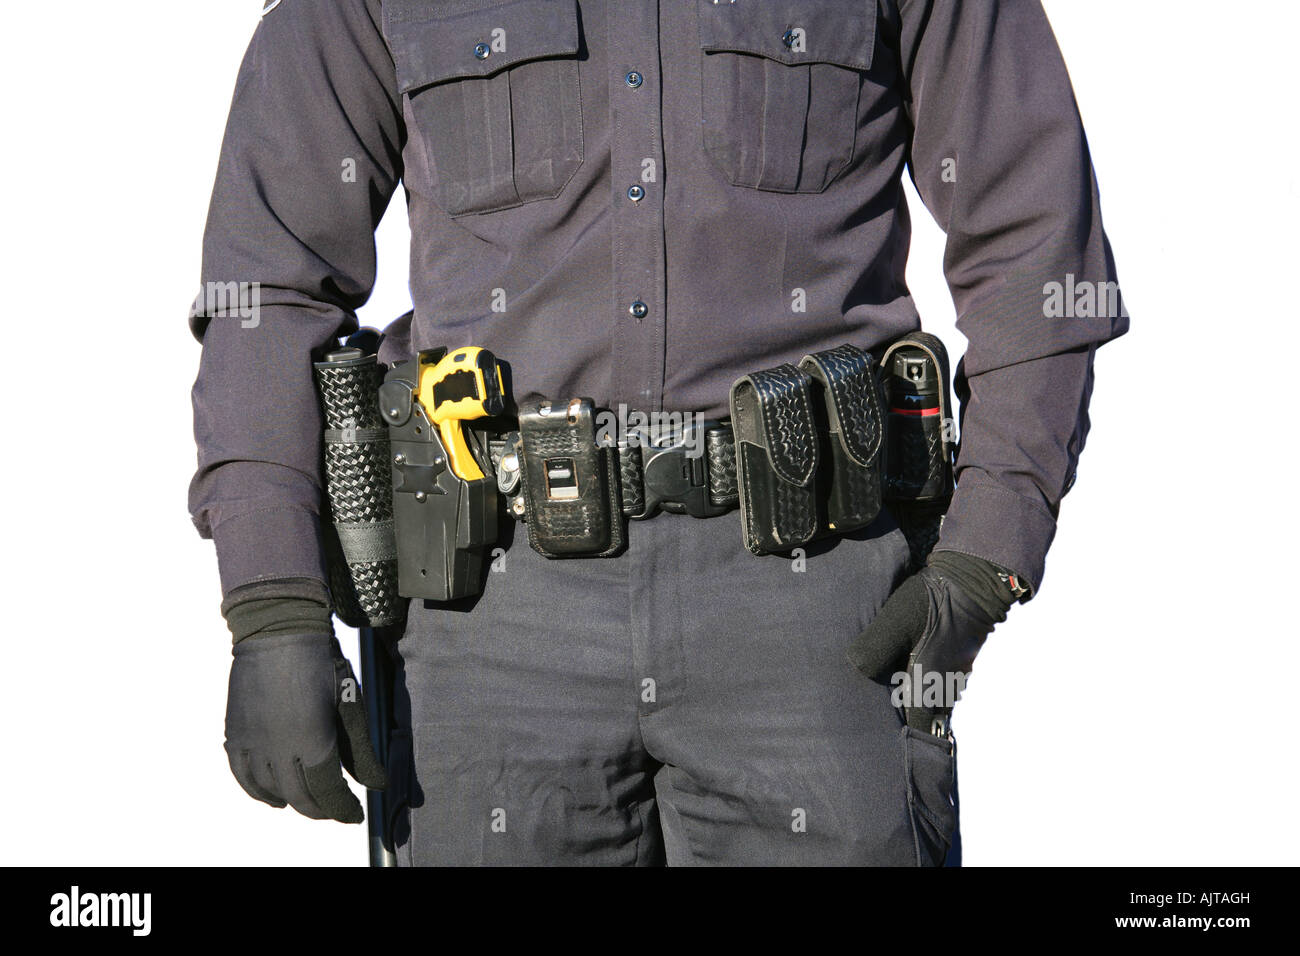 Cinturón policial fotografías e imágenes de alta resolución - Alamy